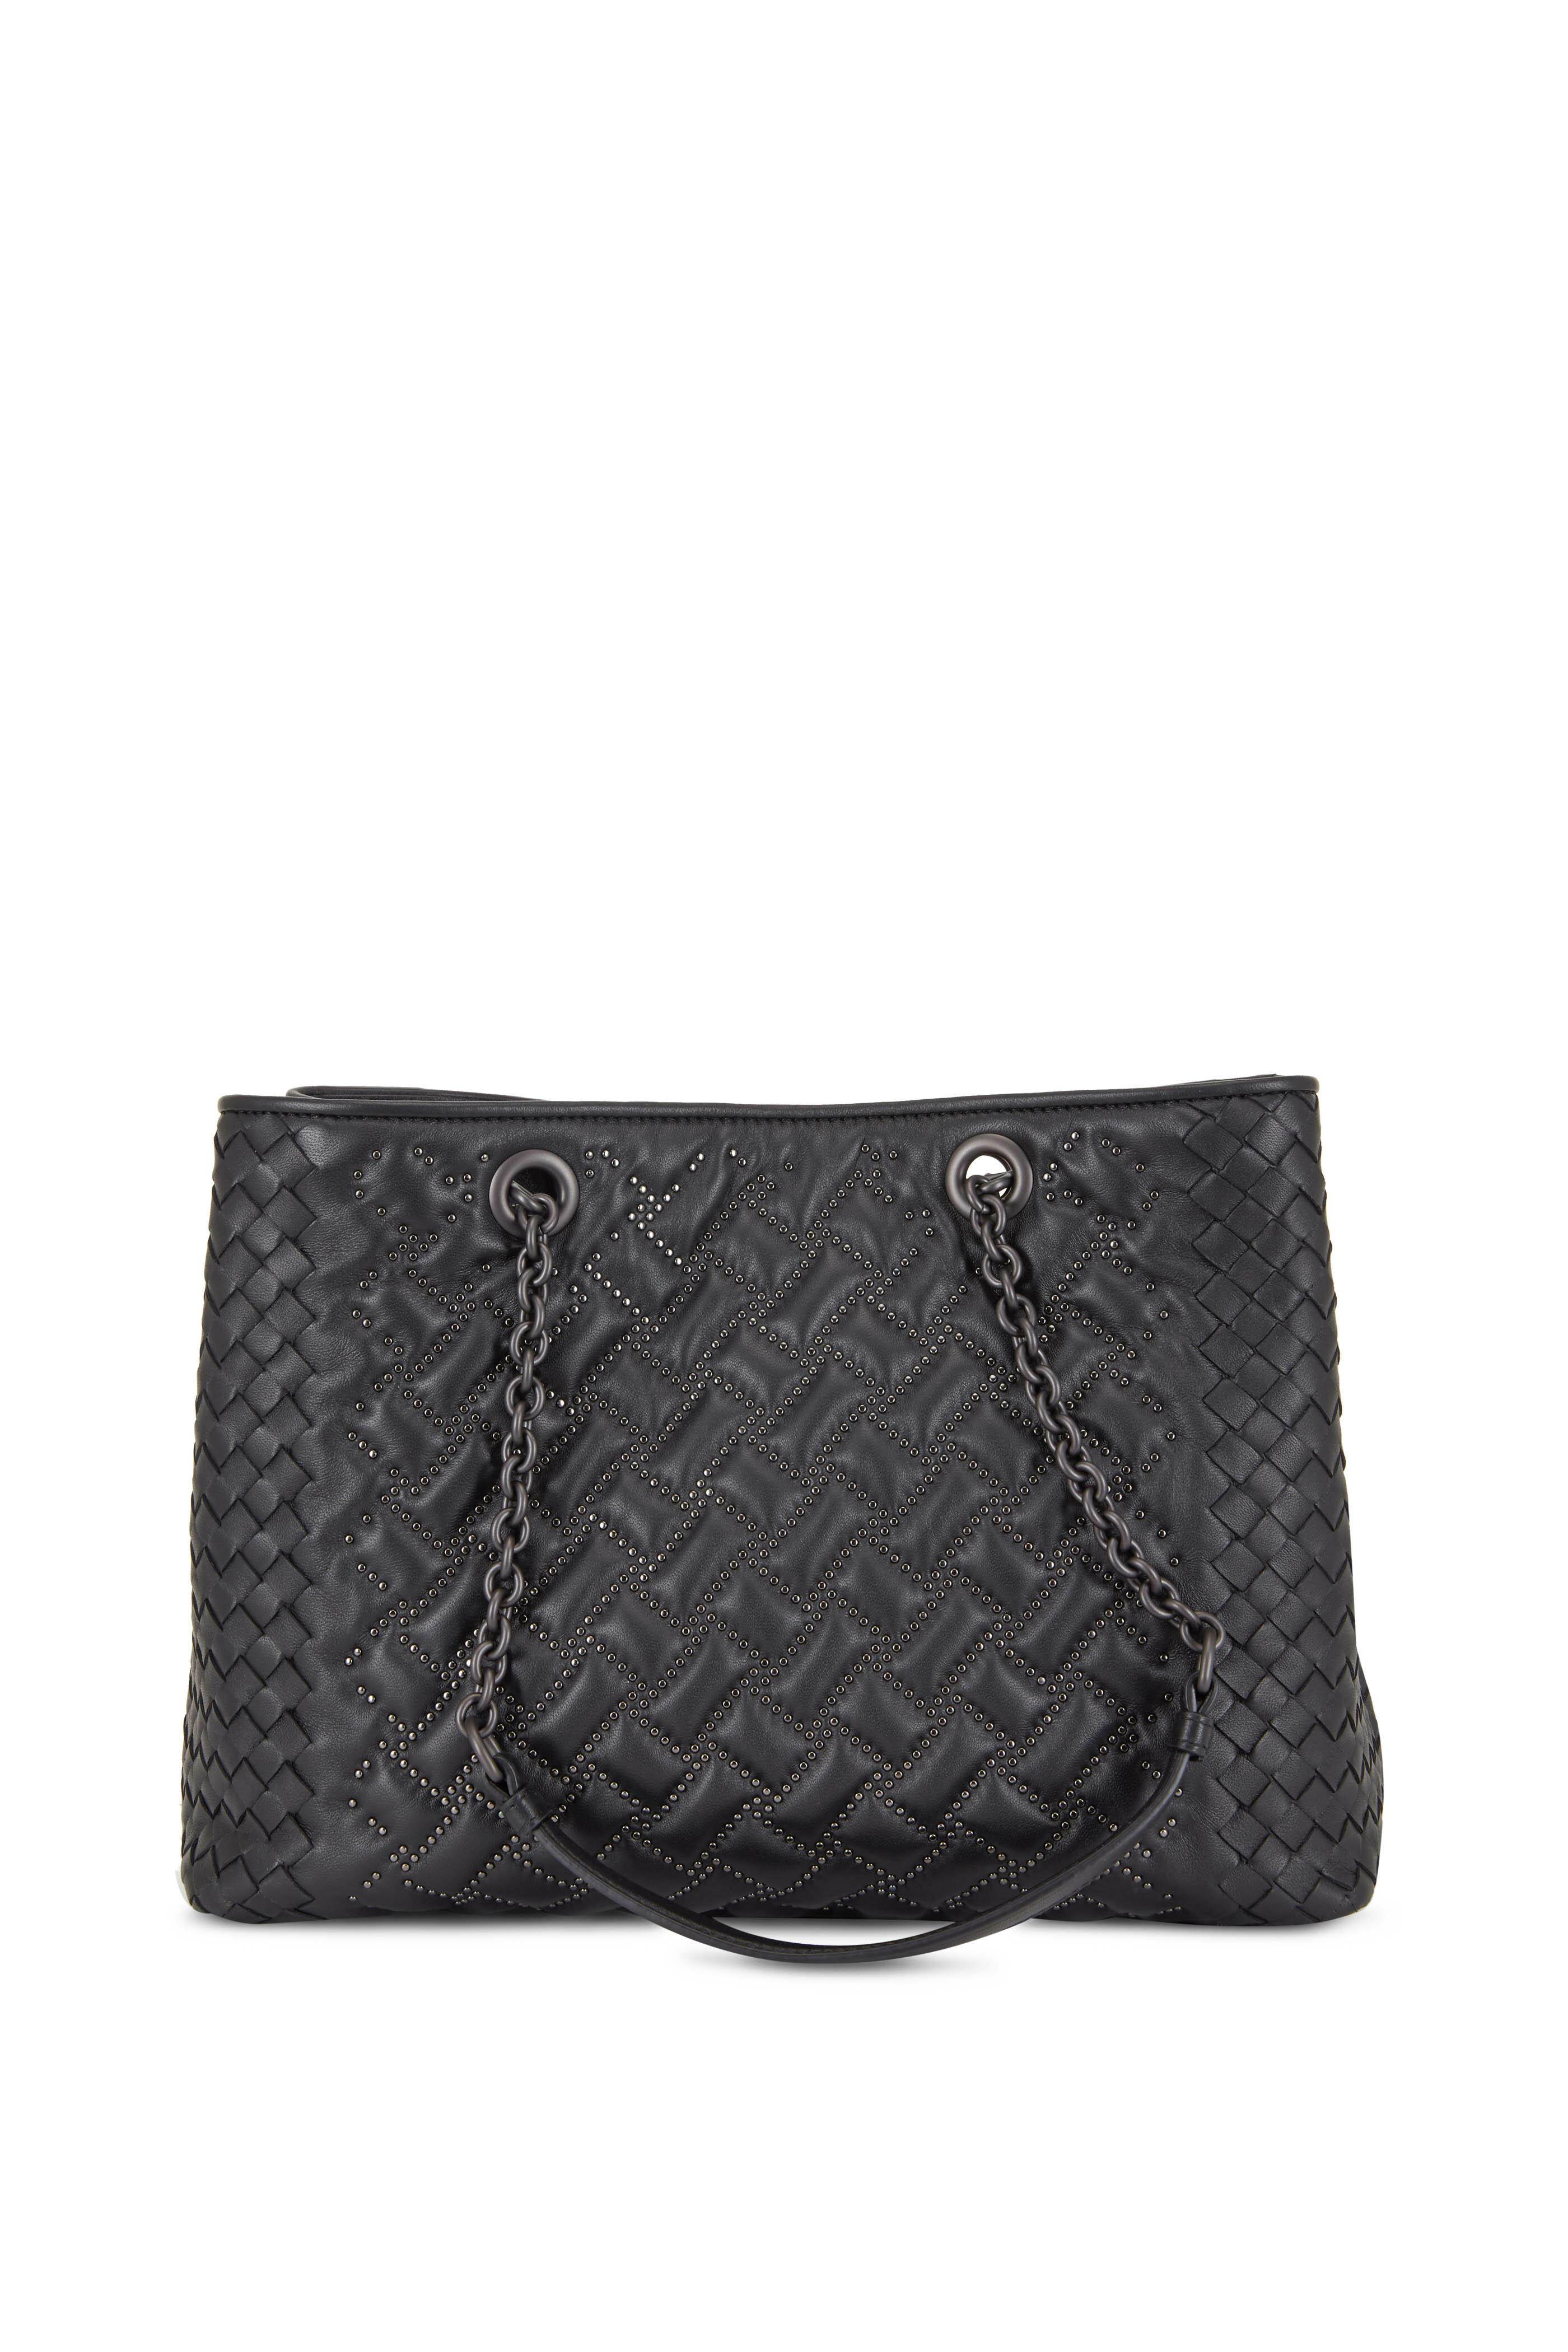 Bottega Veneta - Black Nappa Leather Micro Studded Medium Tote Bag